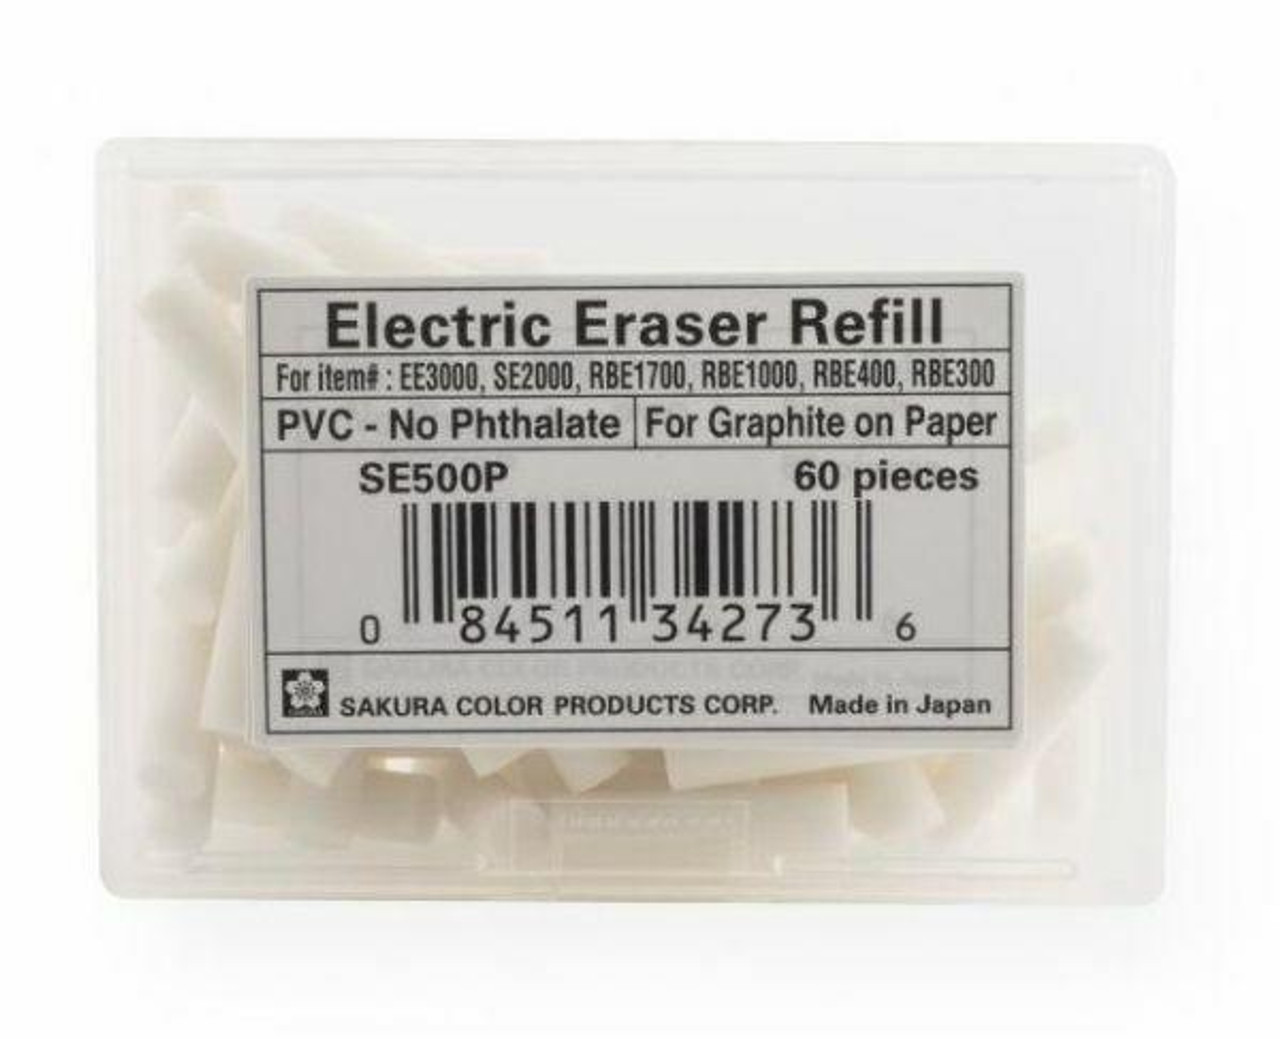 Sakura Sumo Grip Retractable Eraser Refill - Pack of 3